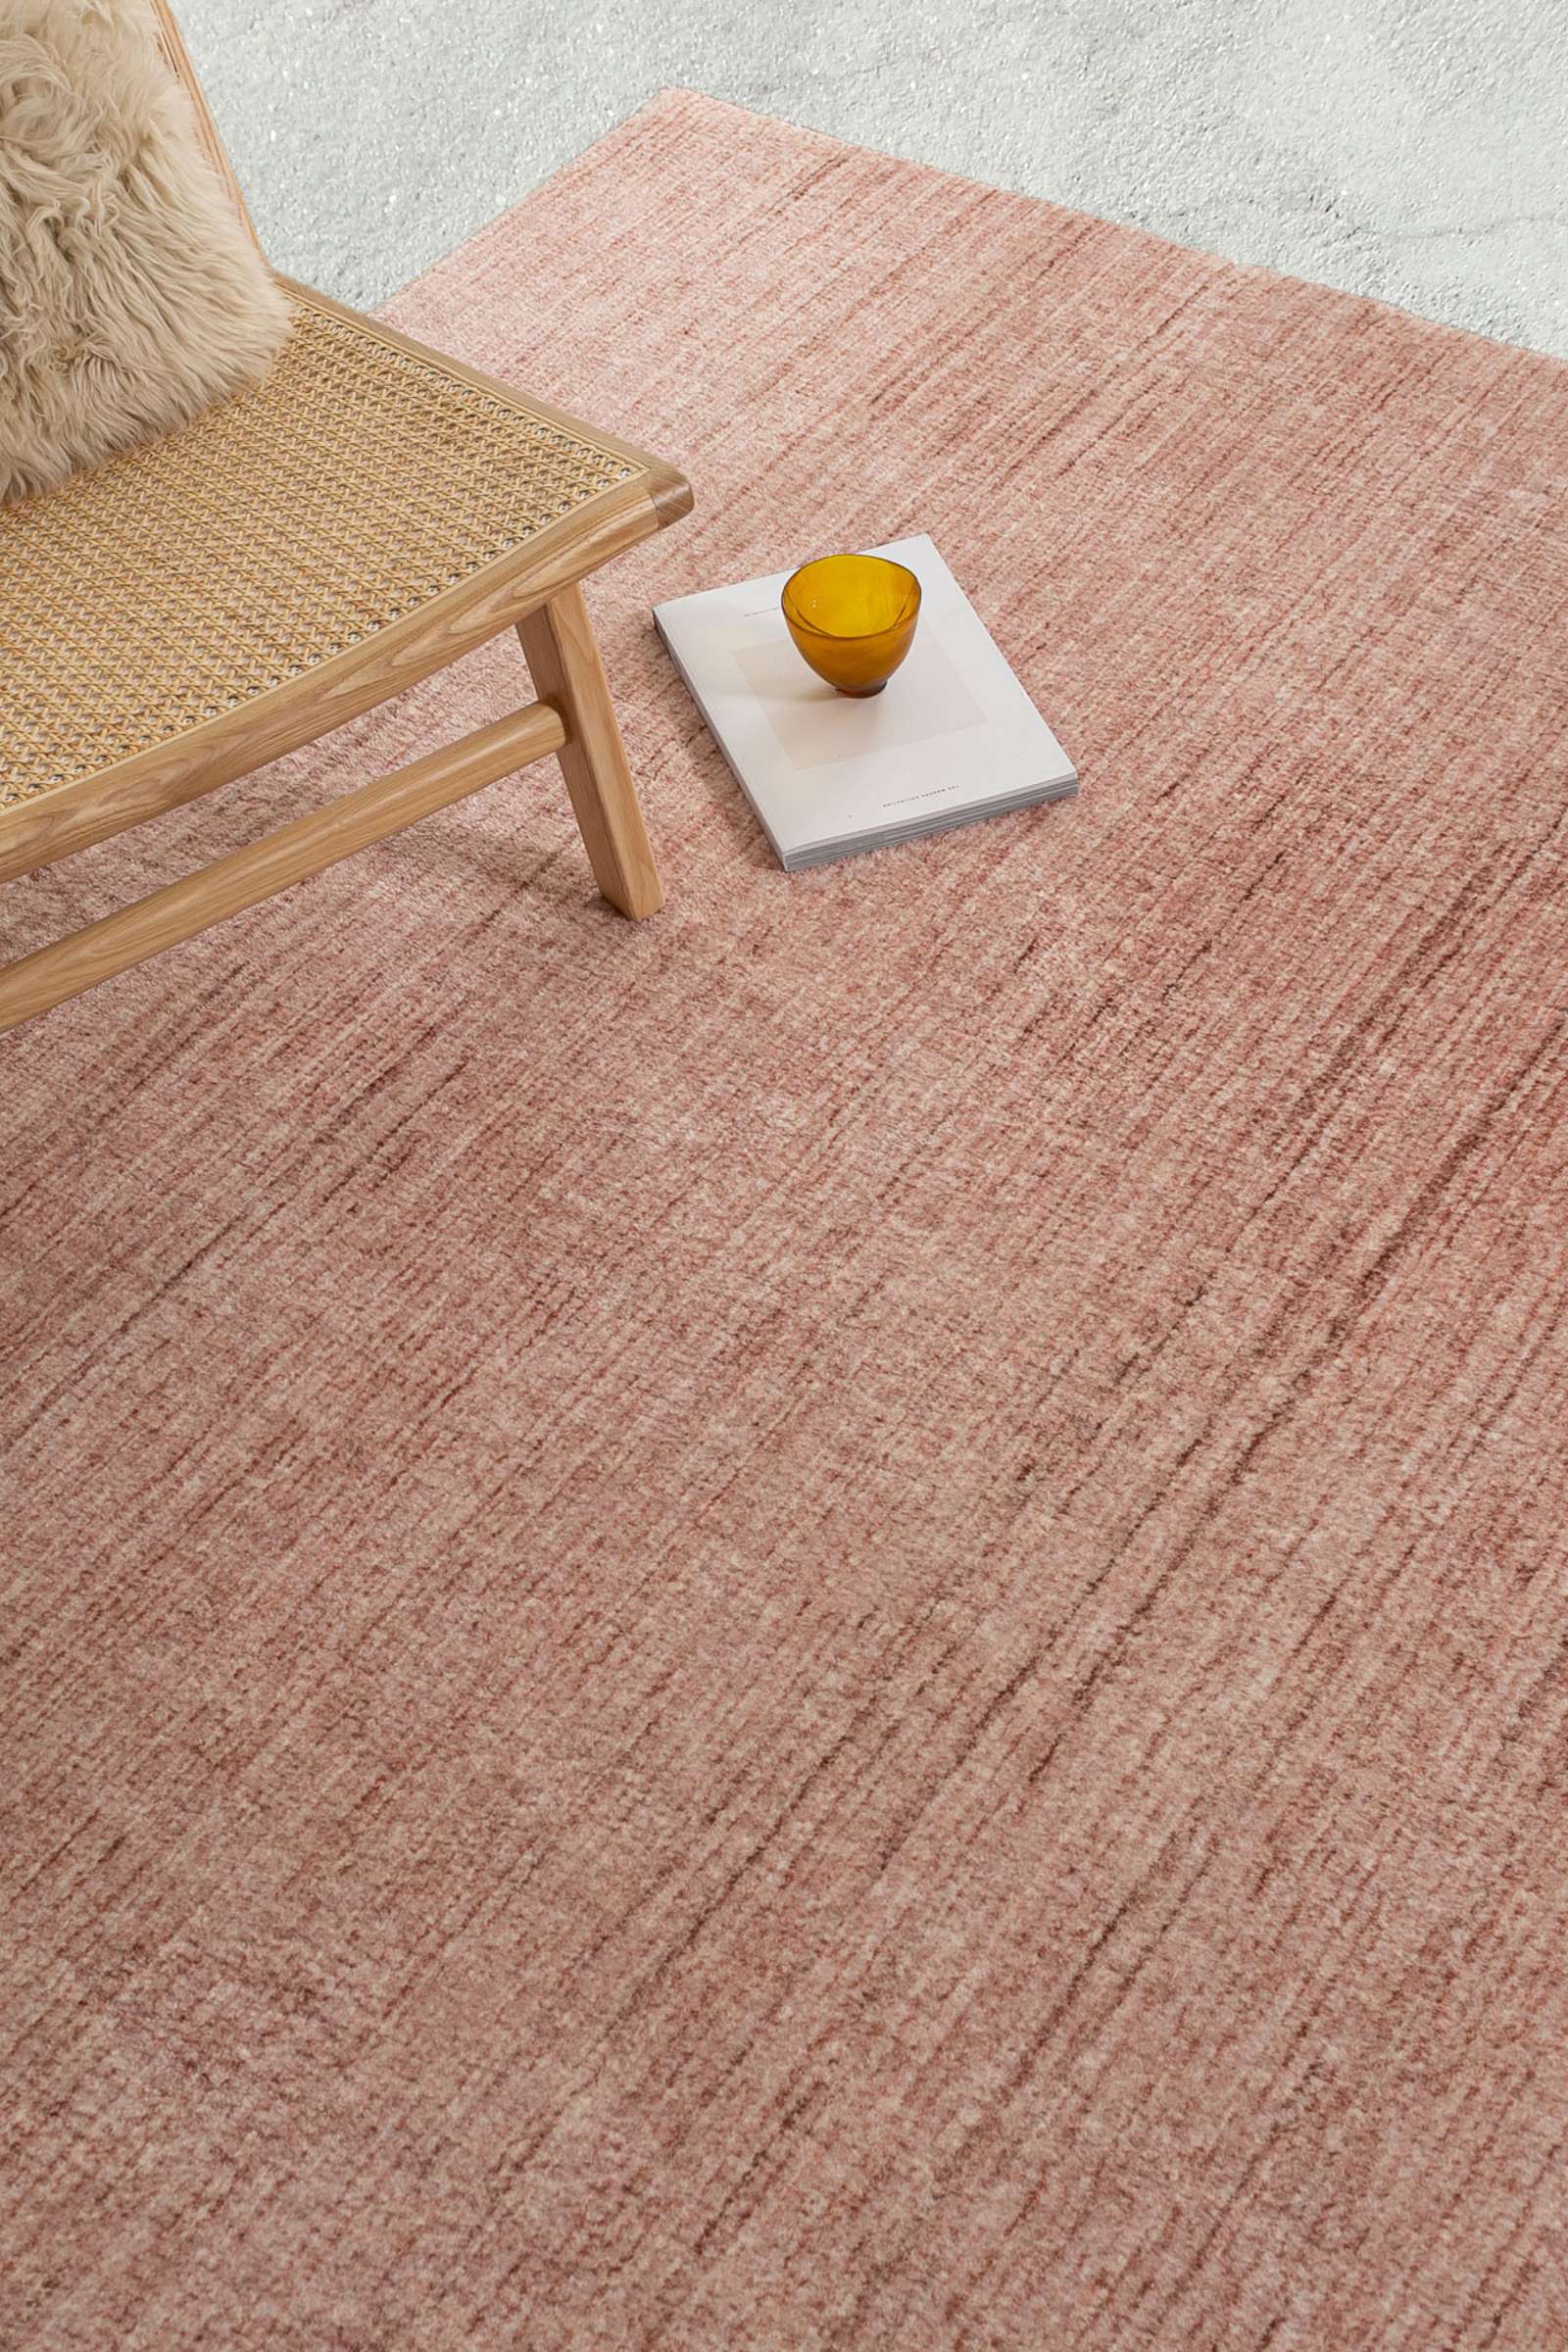 Are machine-washable rugs worth it?